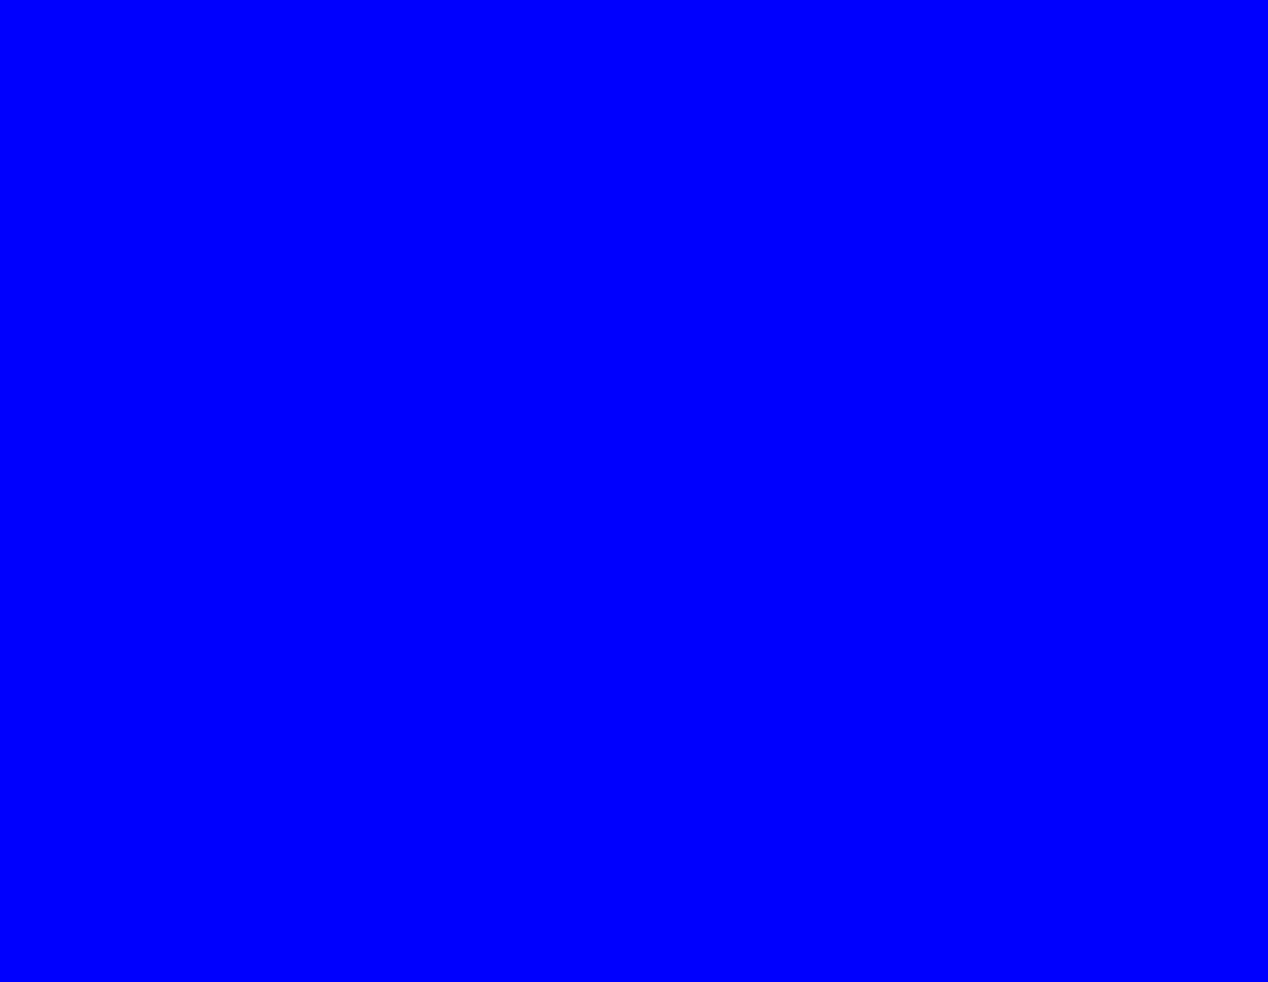 the color blue